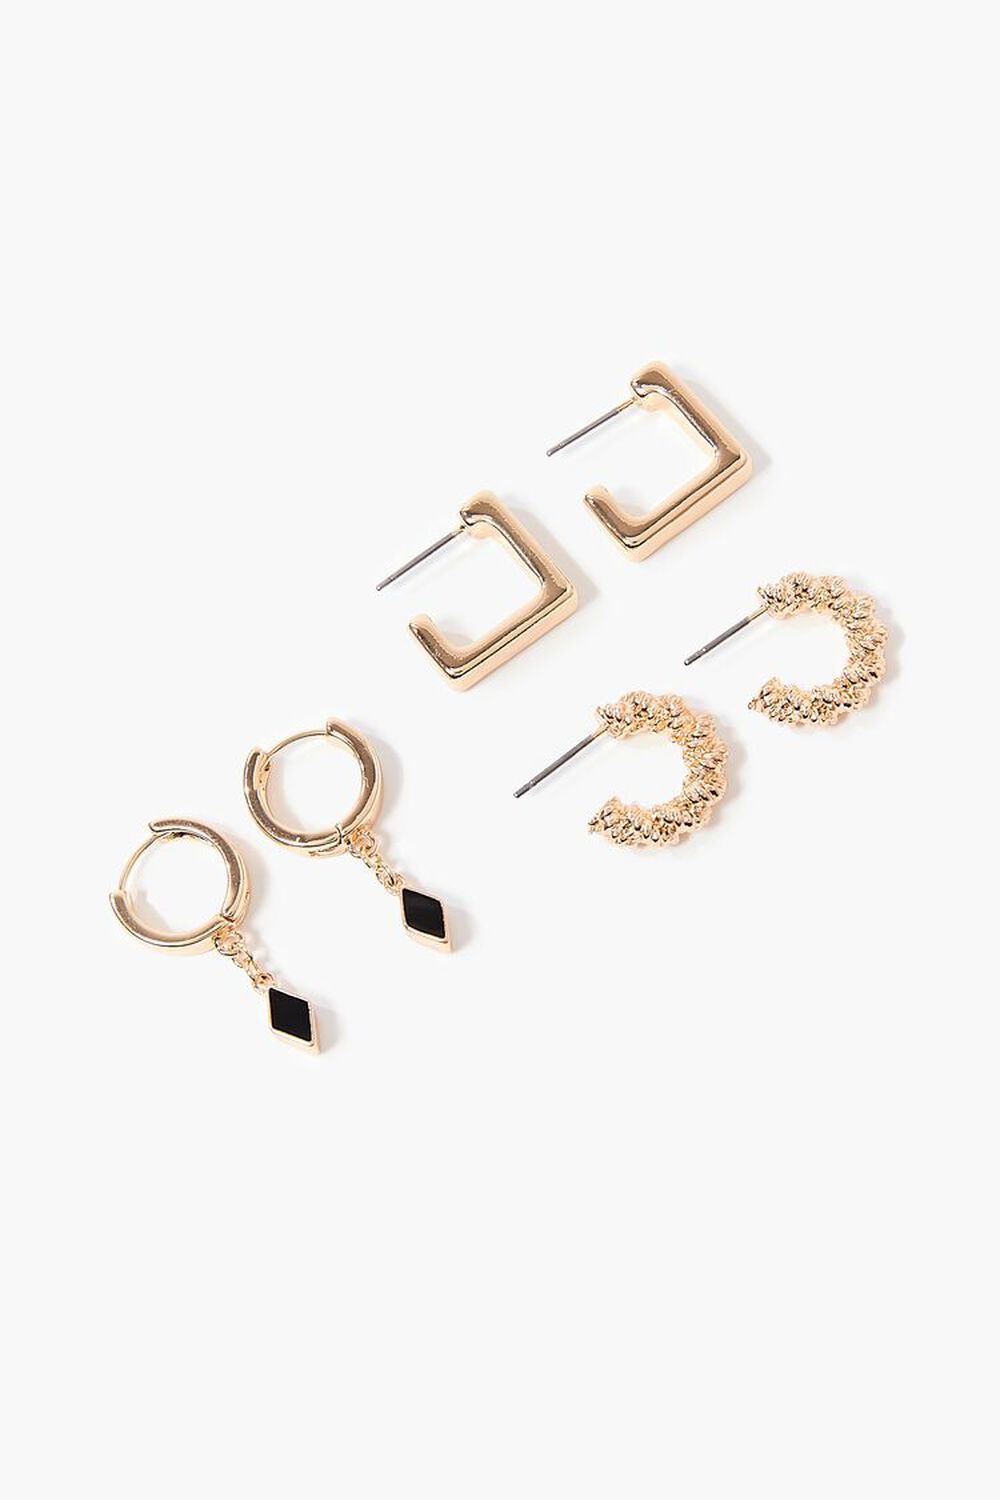 GOLD/BLACK Diamond Charm Hoop Earring Set, image 1